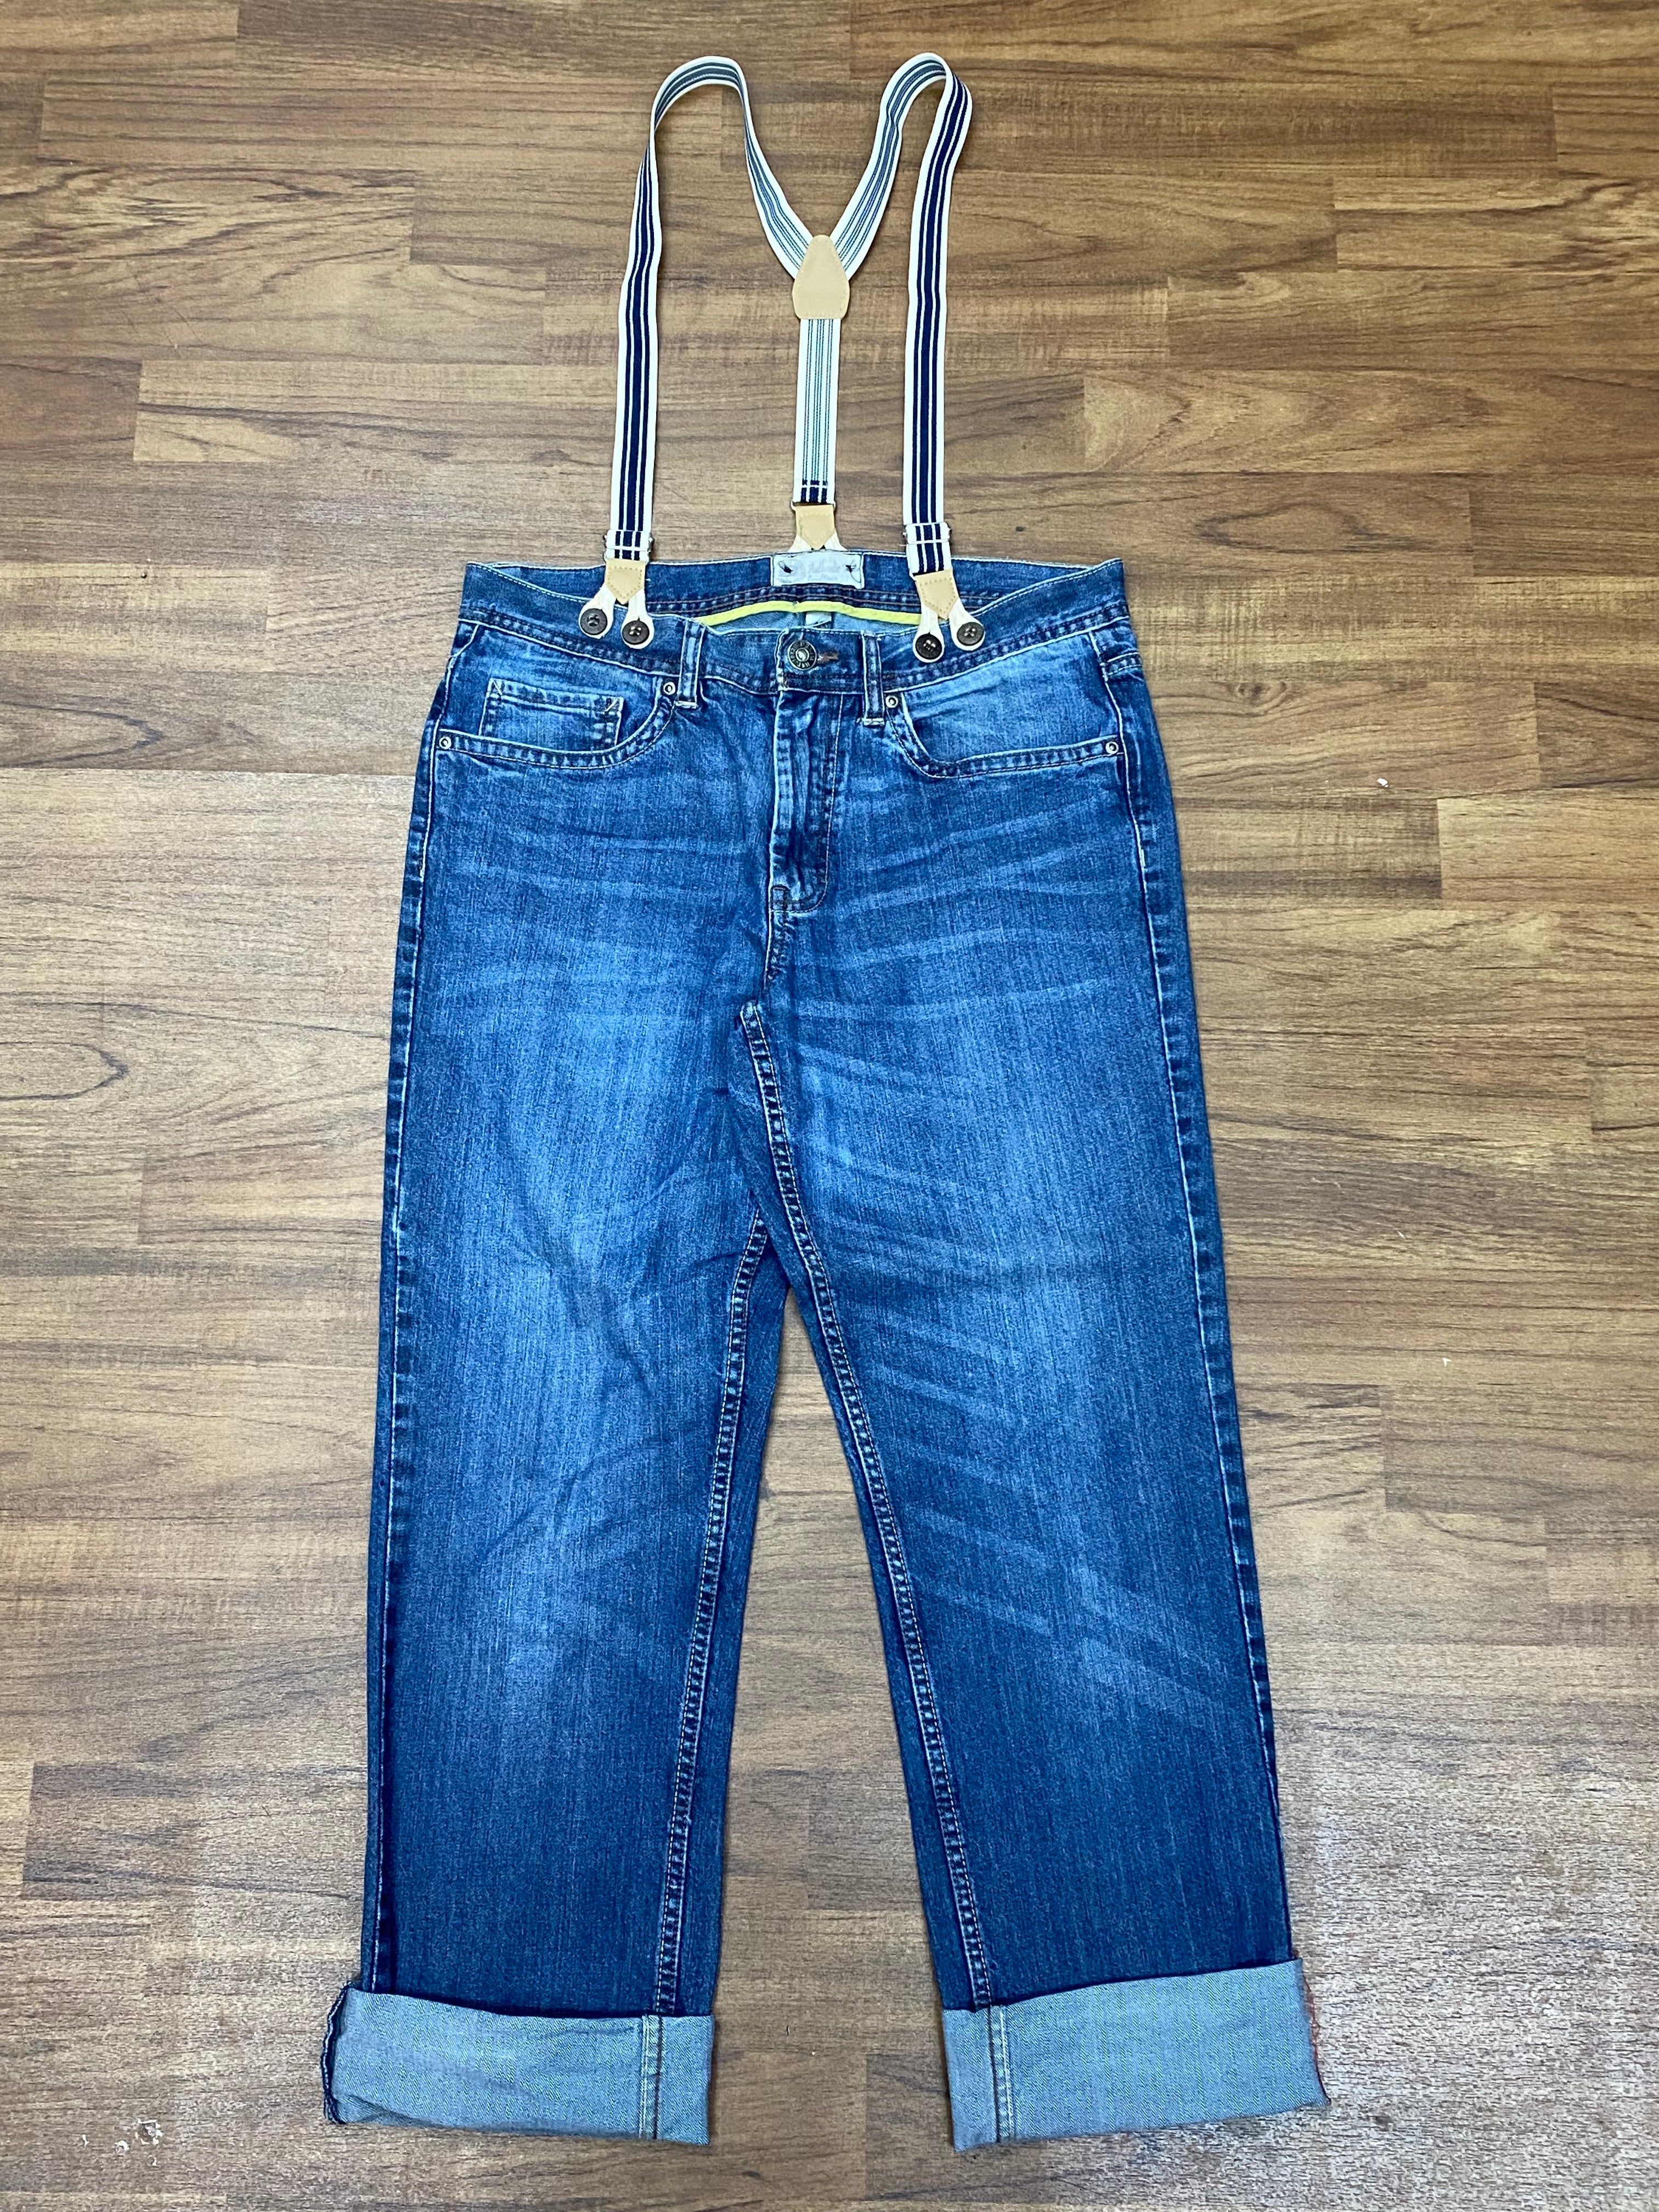 Jeanshose mit Hosenträger im 50er Jahre Retro-Stil, Size: 35/26